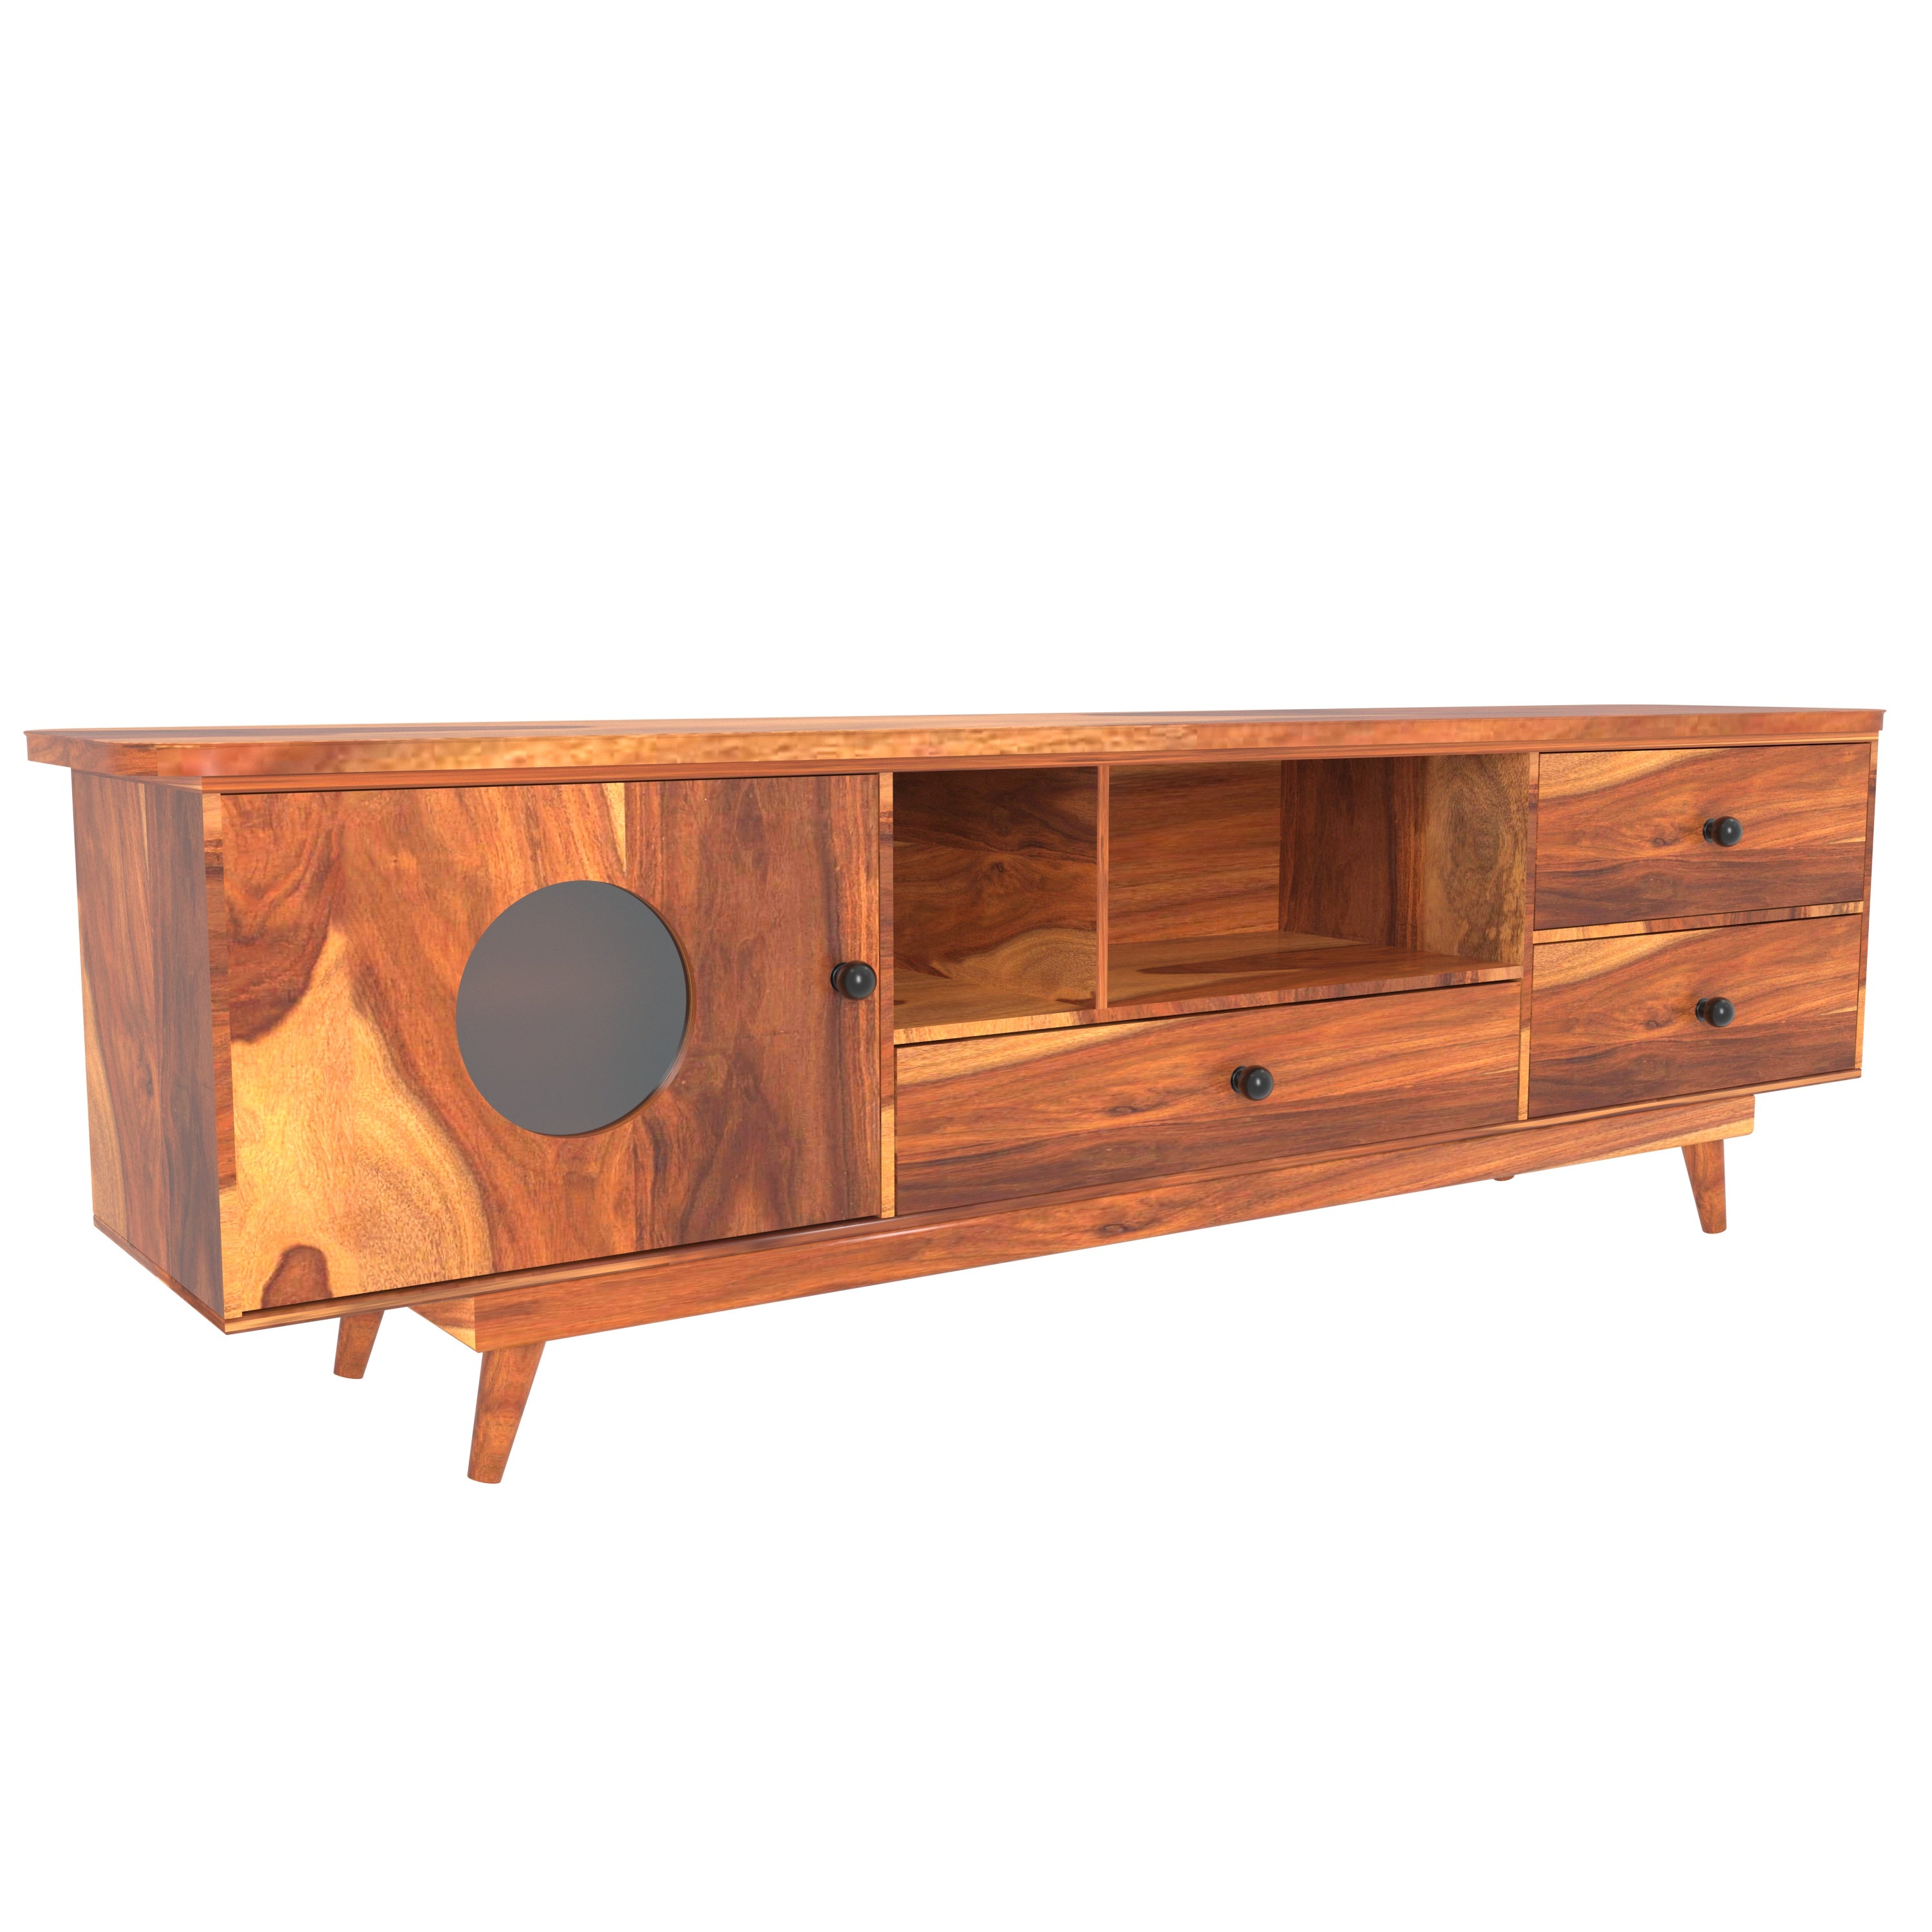 Luxurious Landscape Style Handmade Multistorage Wooden TV Stand Tv stand